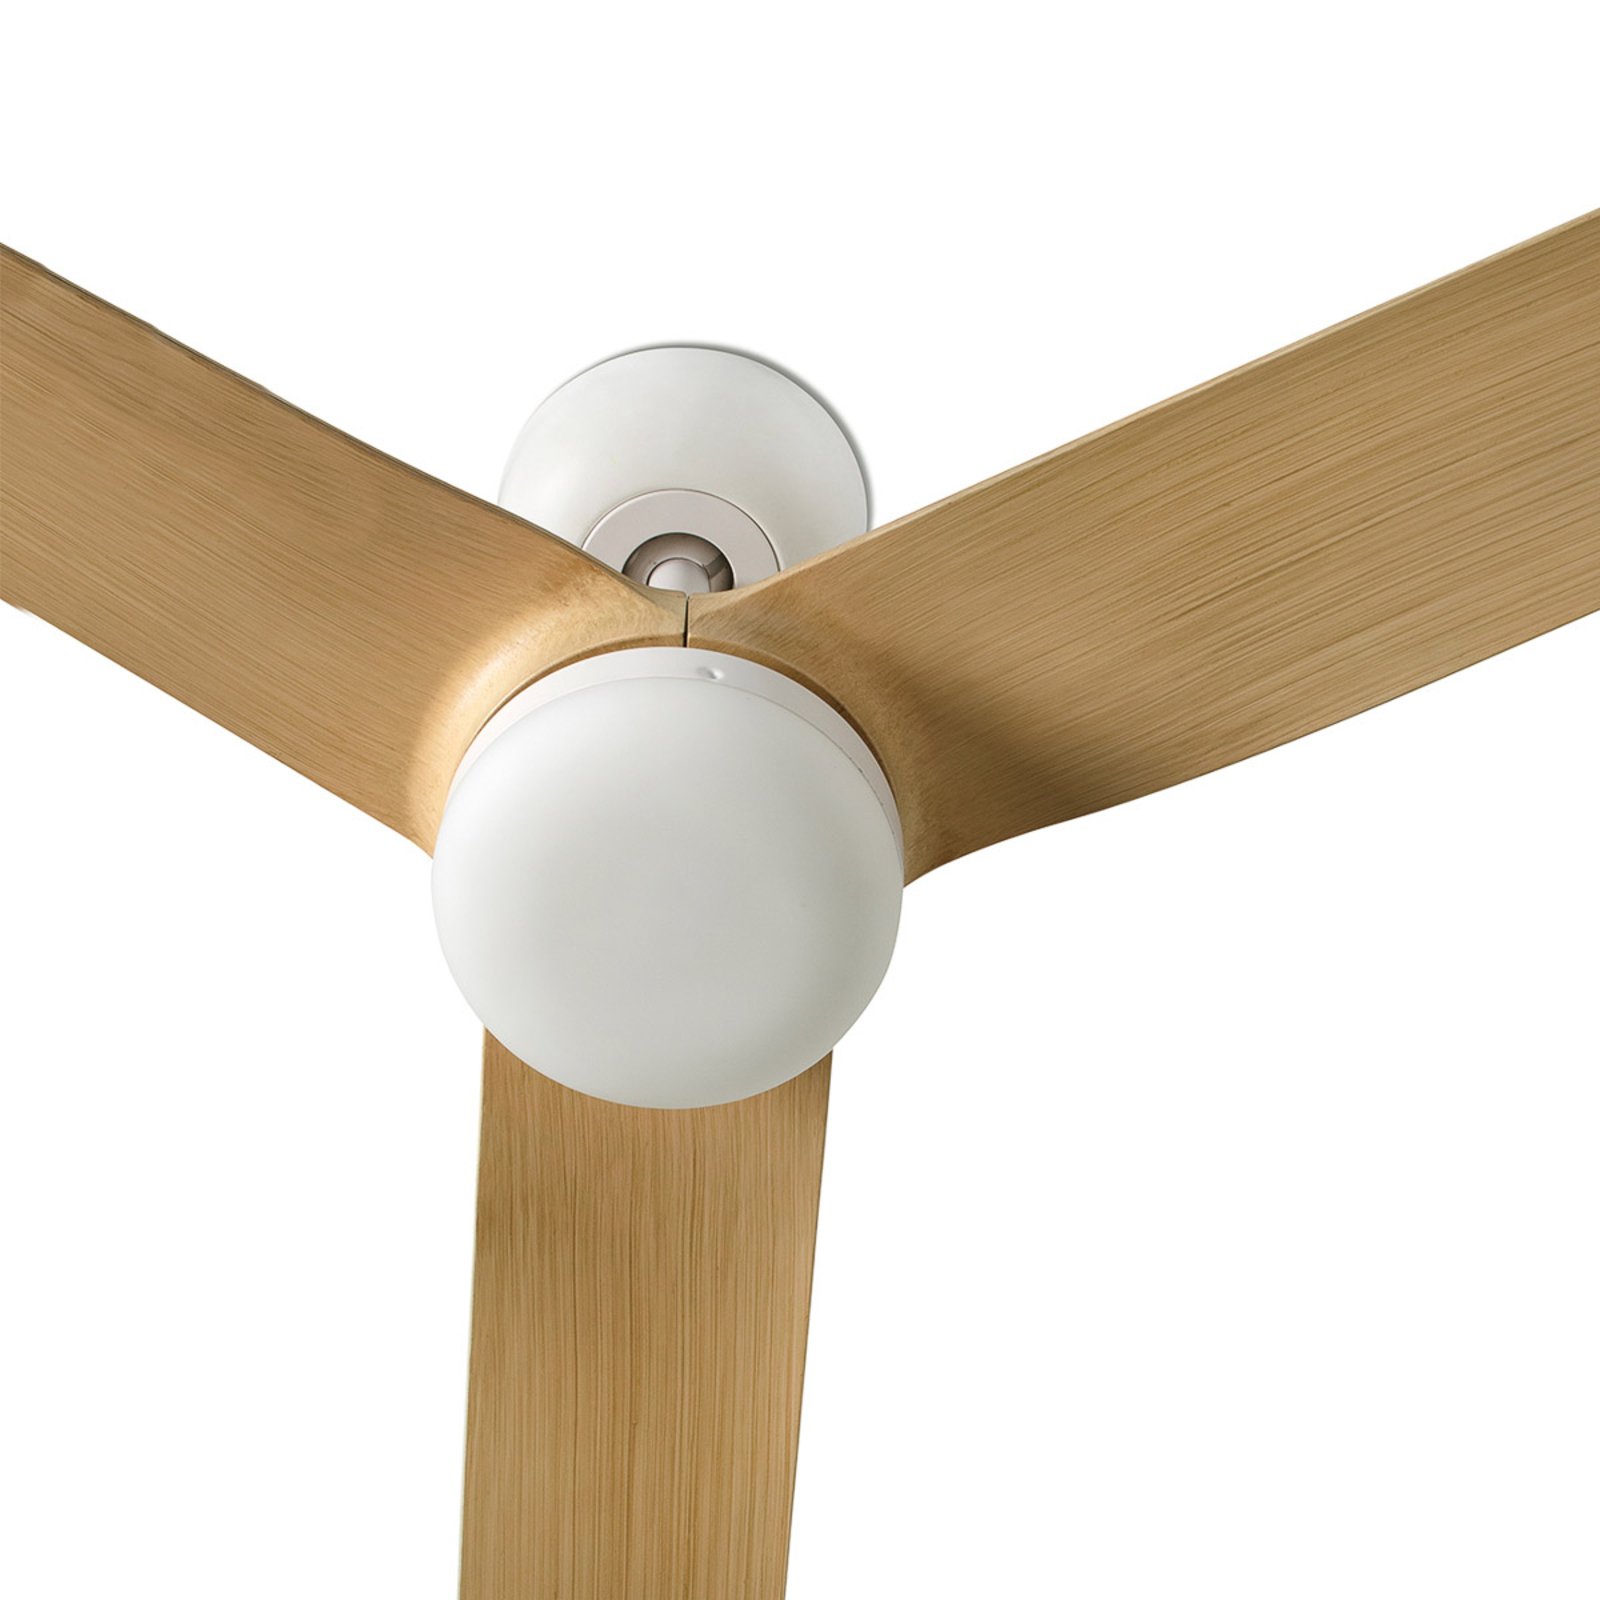 Punt M ceiling fan, DC, white/light wood